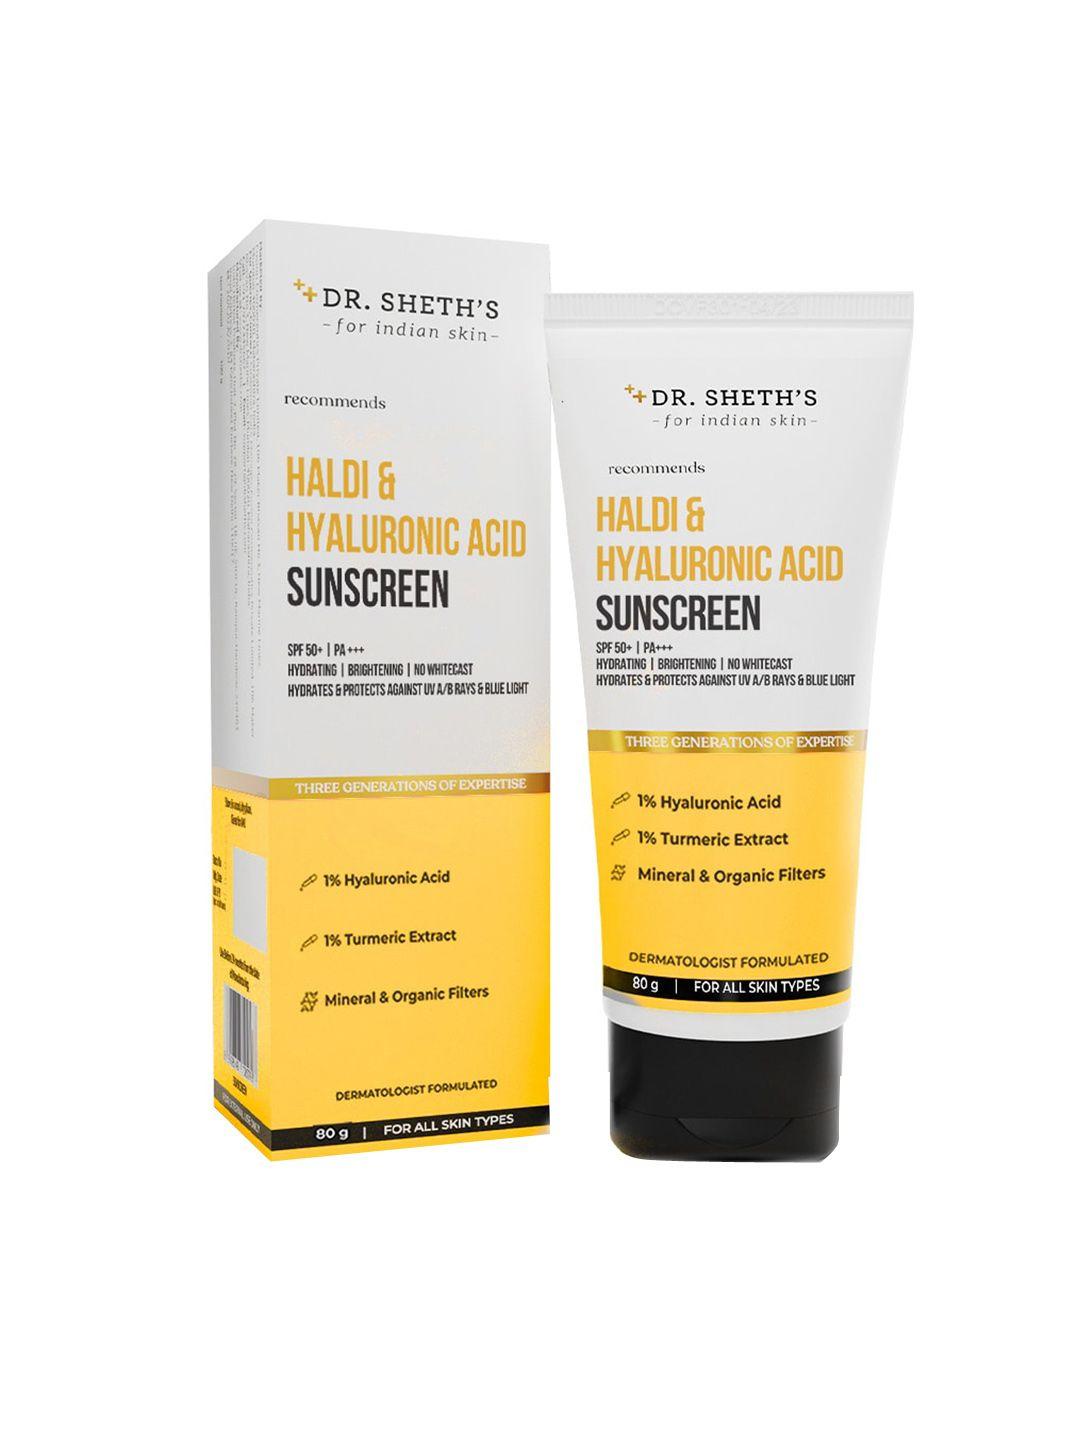 dr. sheths haldi & hyaluronic acid sunscreen - 80g